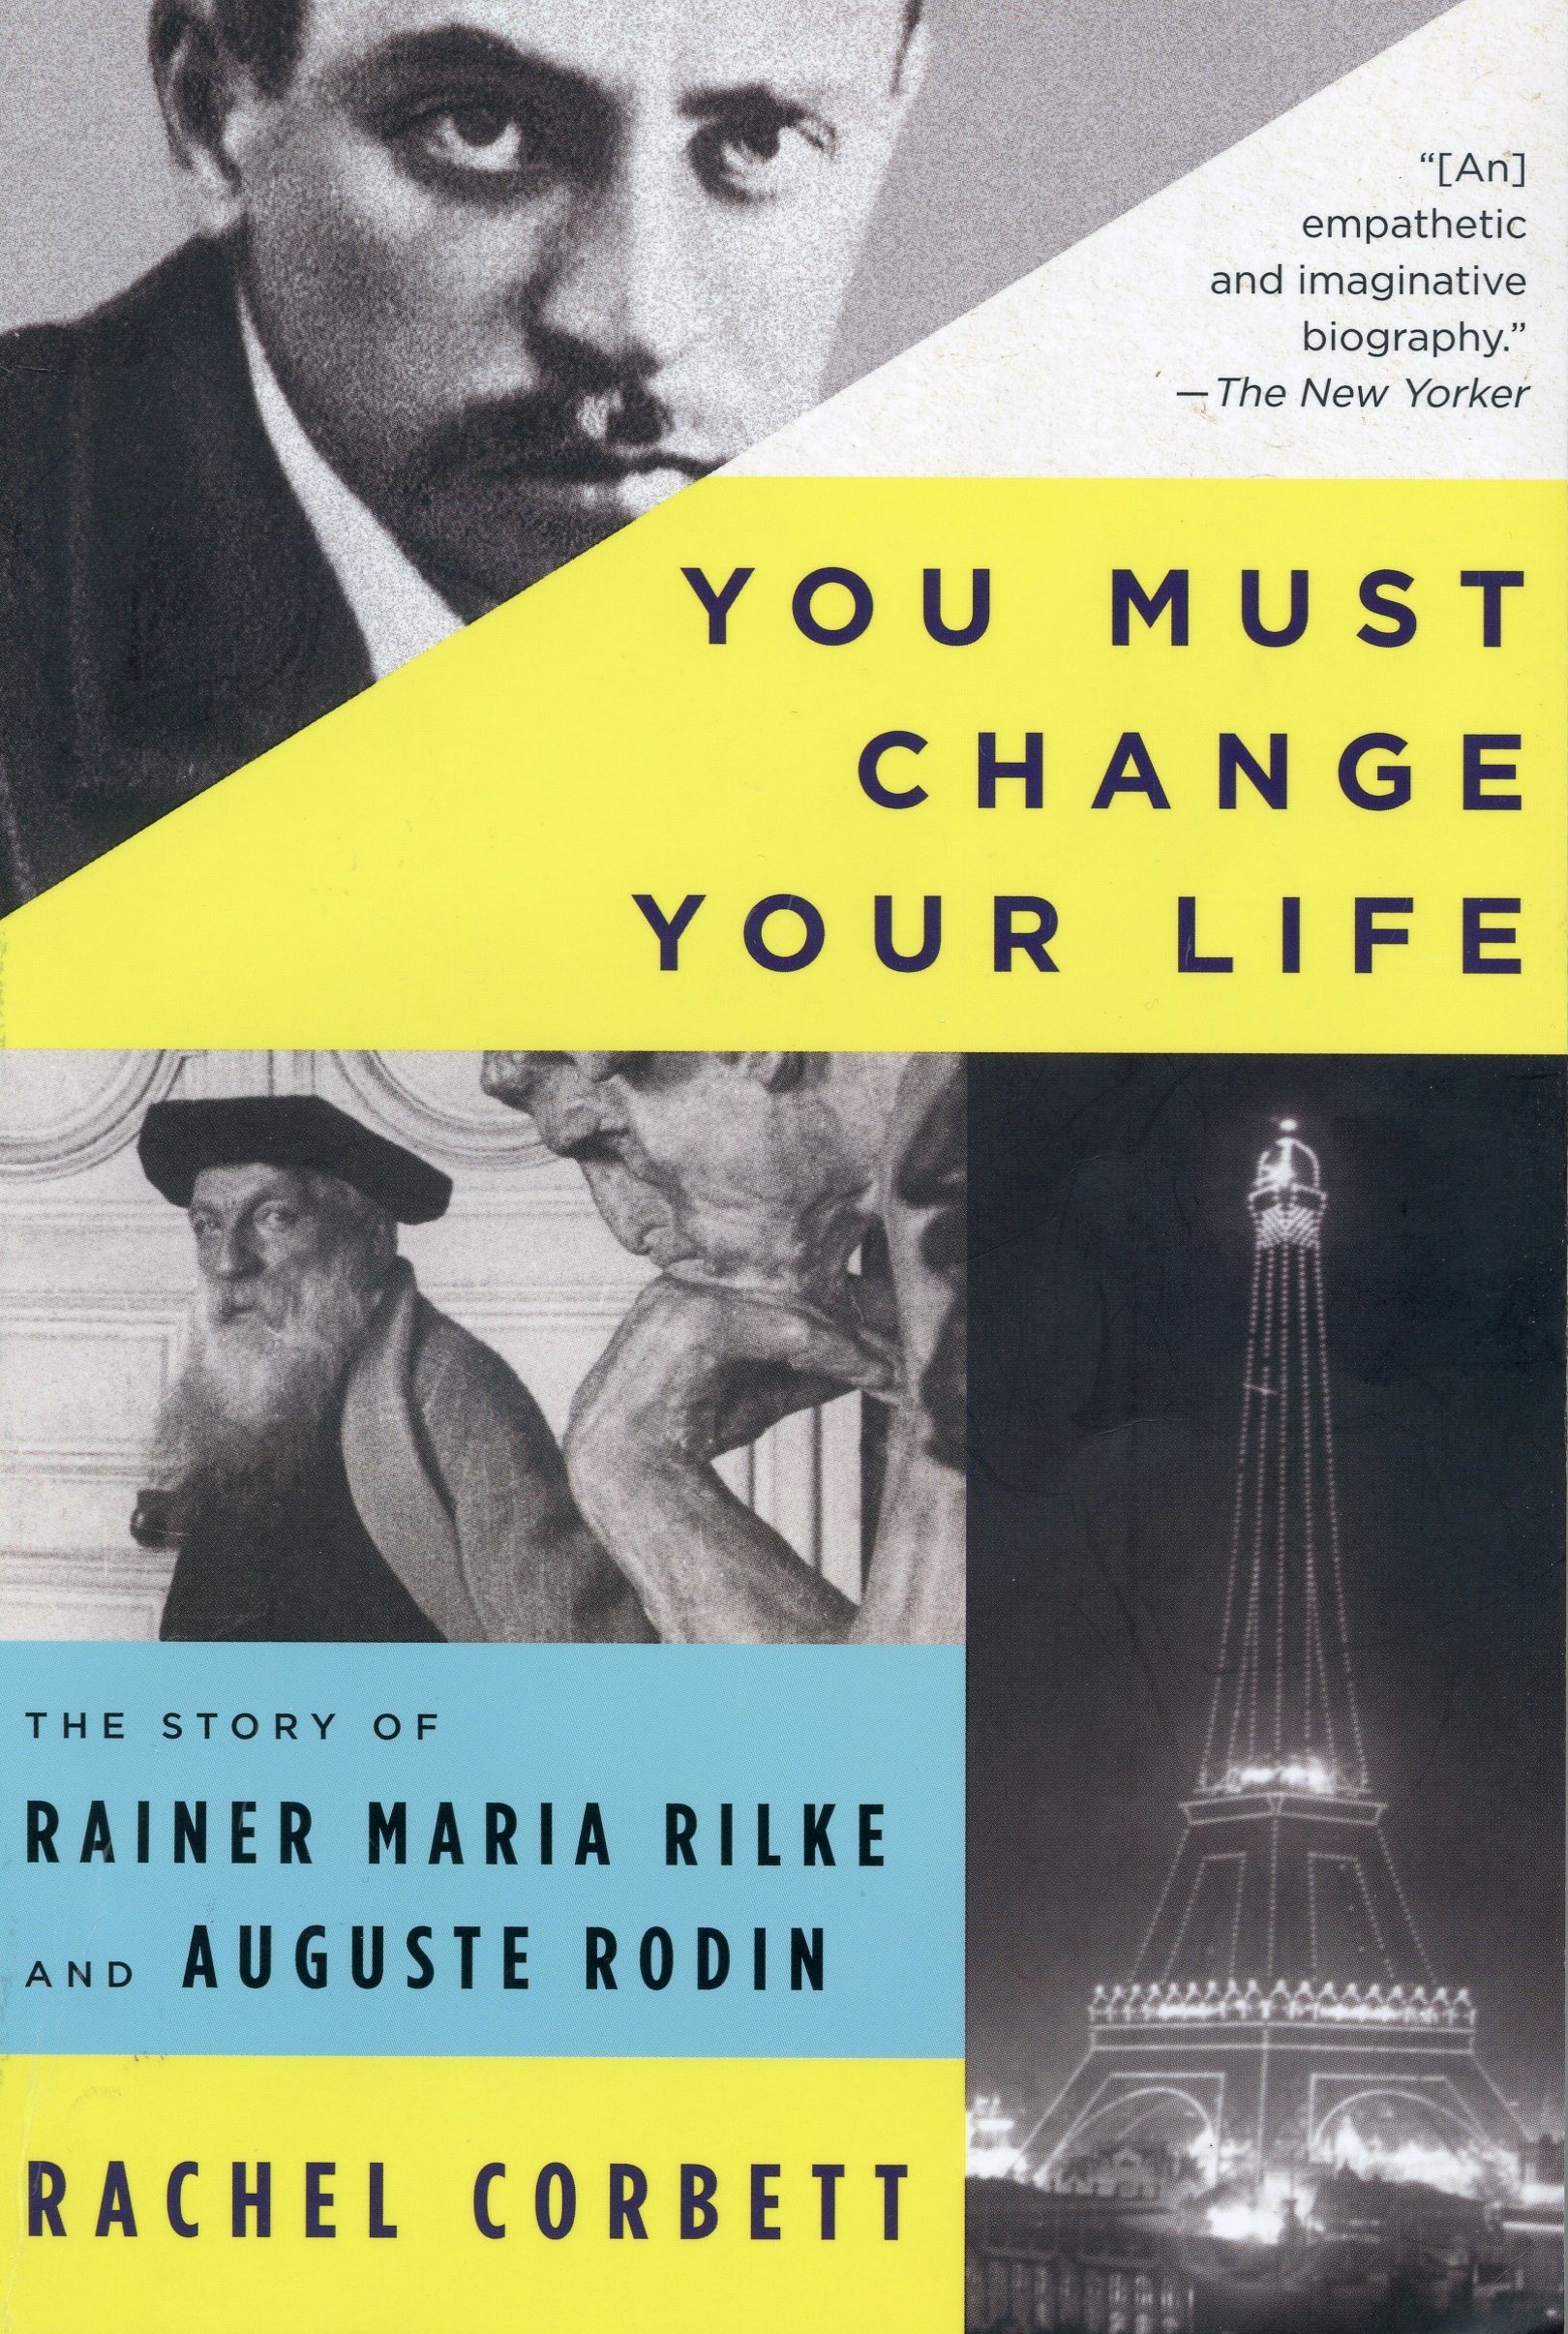 Book #9 in 2018: “You Must Change Your Life” by Rachel Corbett